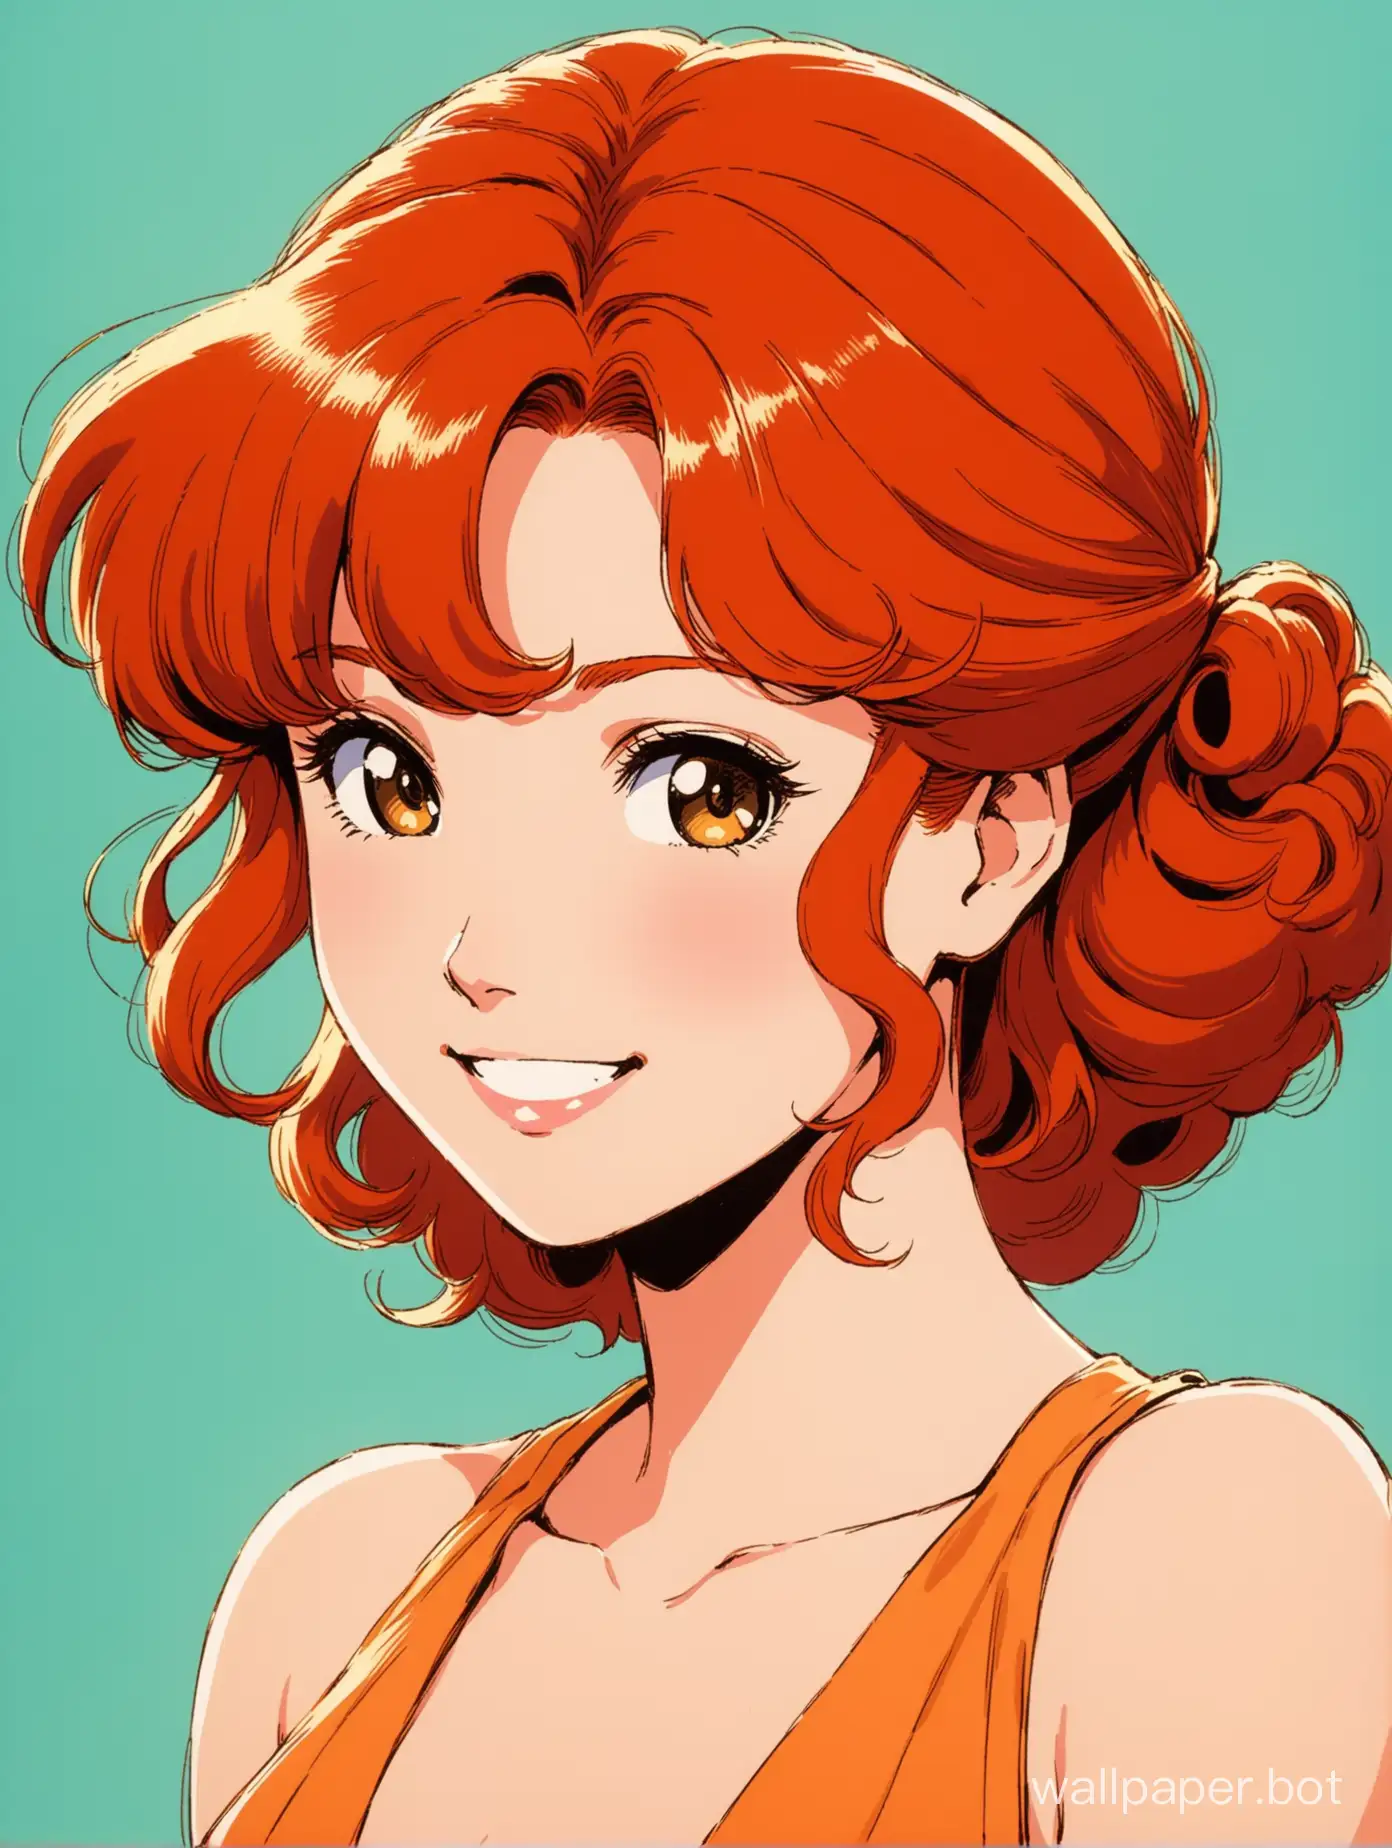 Radiant-Redhead-Woman-1980s-Retro-Anime-Portrait